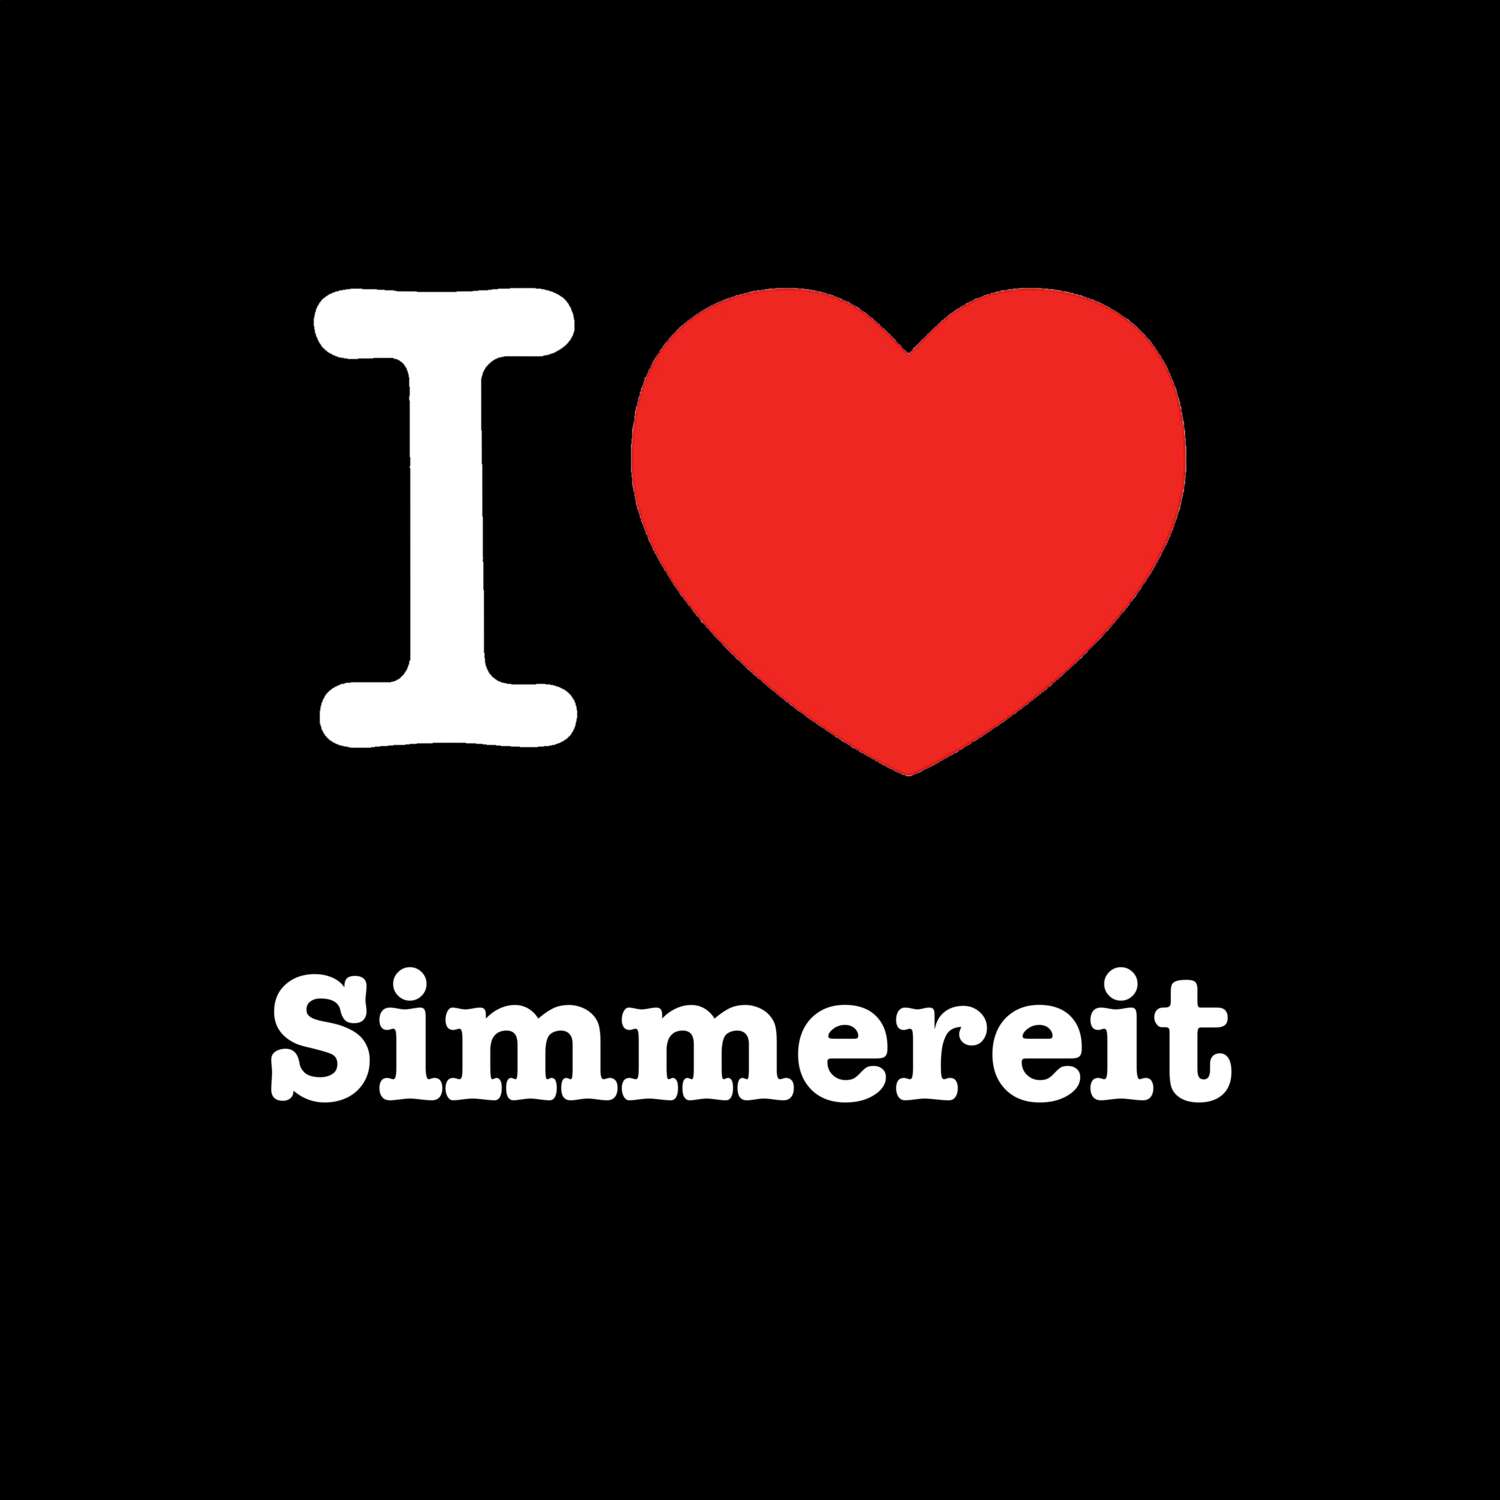 Simmereit T-Shirt »I love«